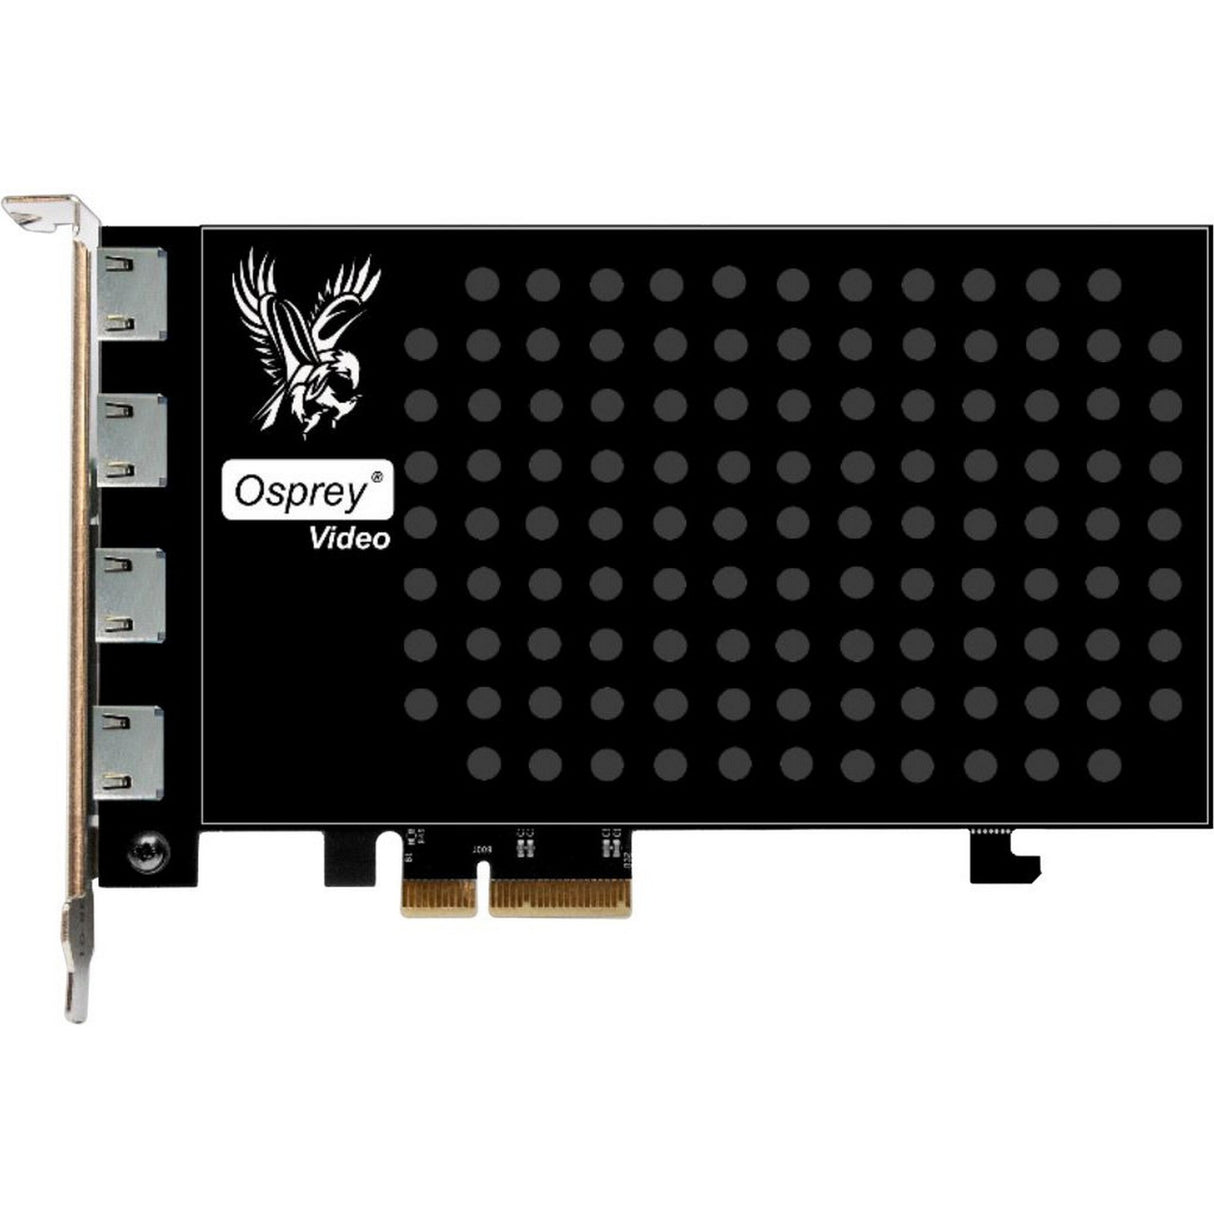 Osprey Video Raptor 944 2 x HDMI 1.4 4K30 / 4 x HDMI 1.3 1080p60 Video Capture Card